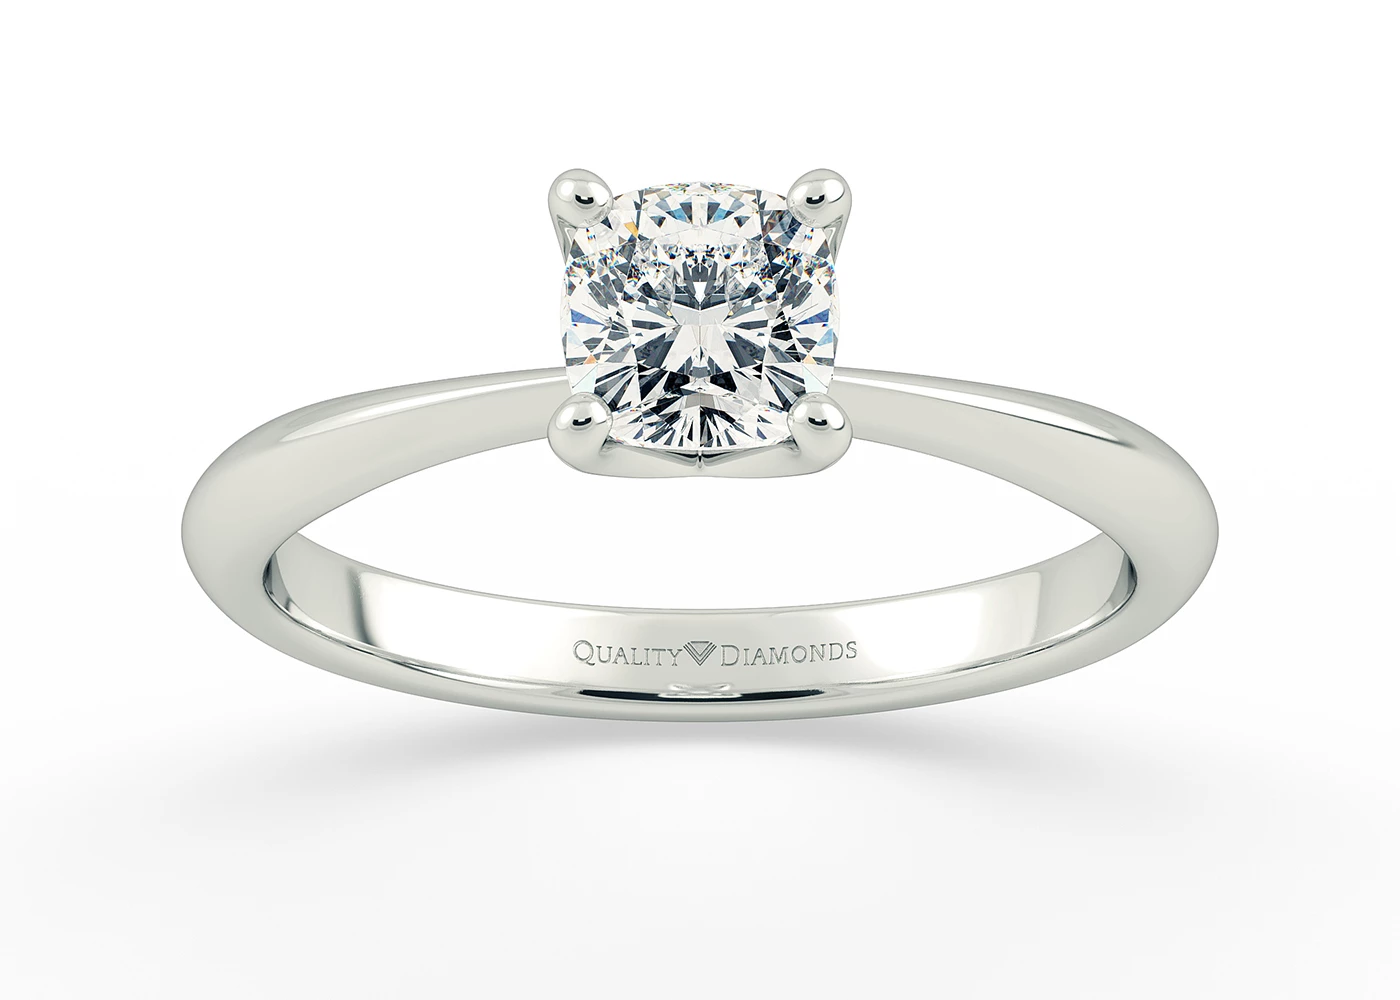 One Carat Cushion Solitaire Diamond Engagement Ring in Platinum 950